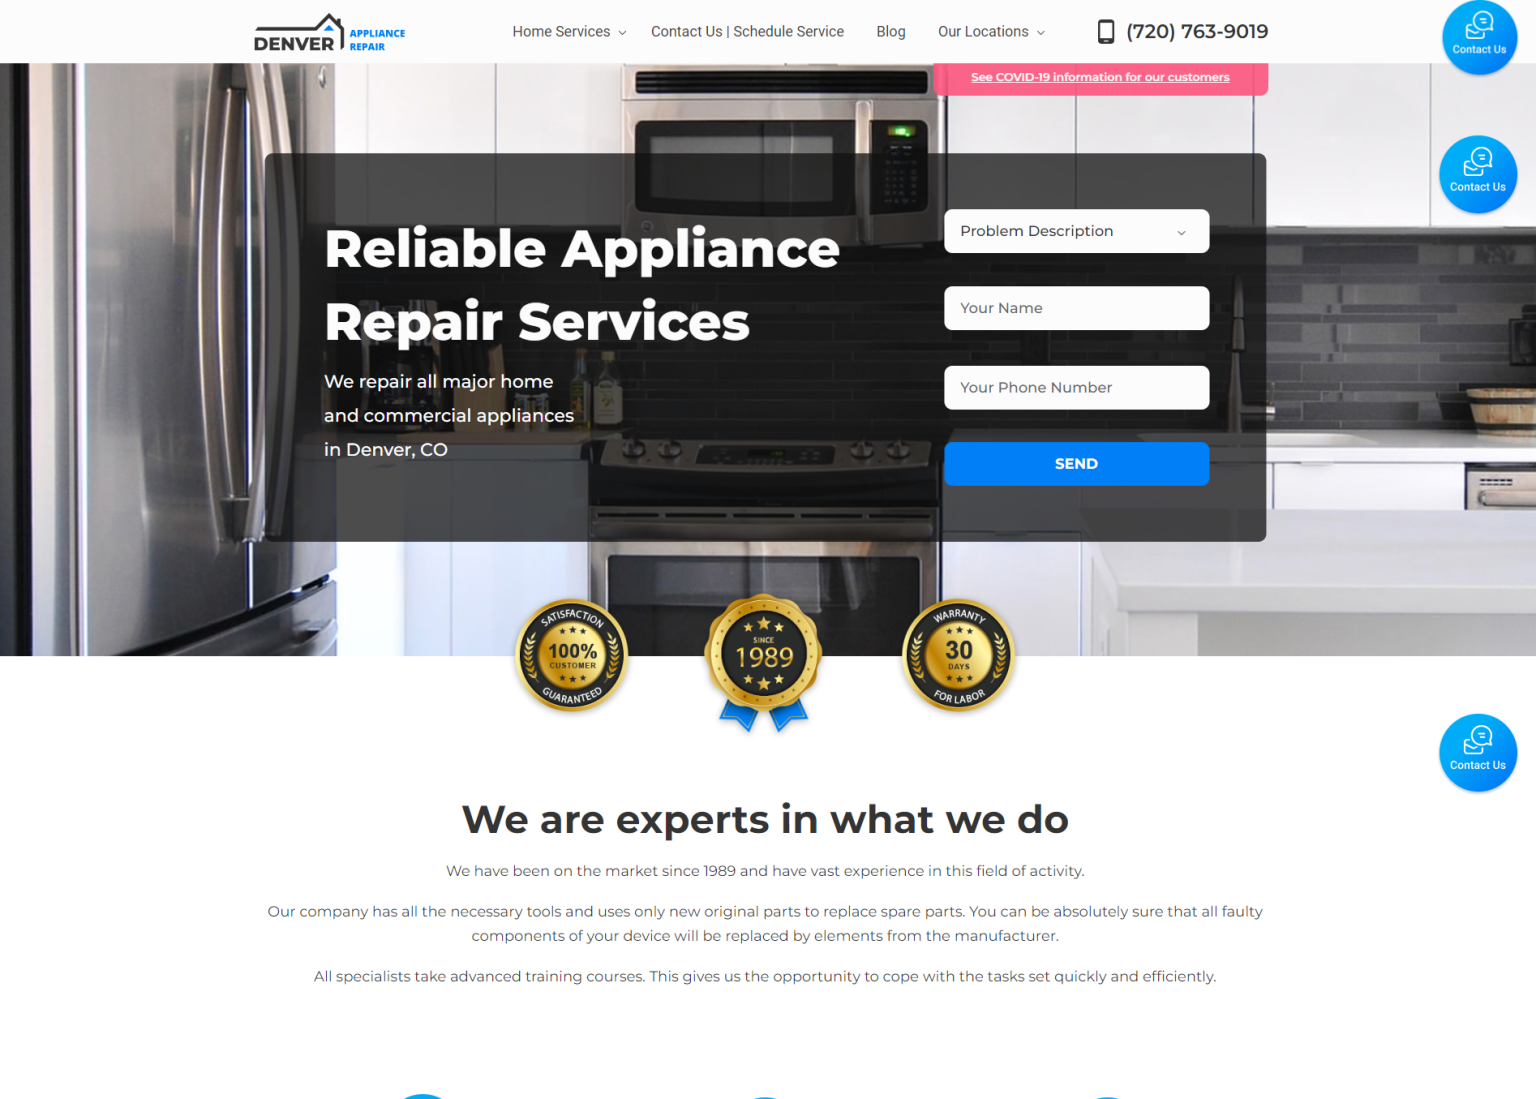 Denver Appliance Repair Service